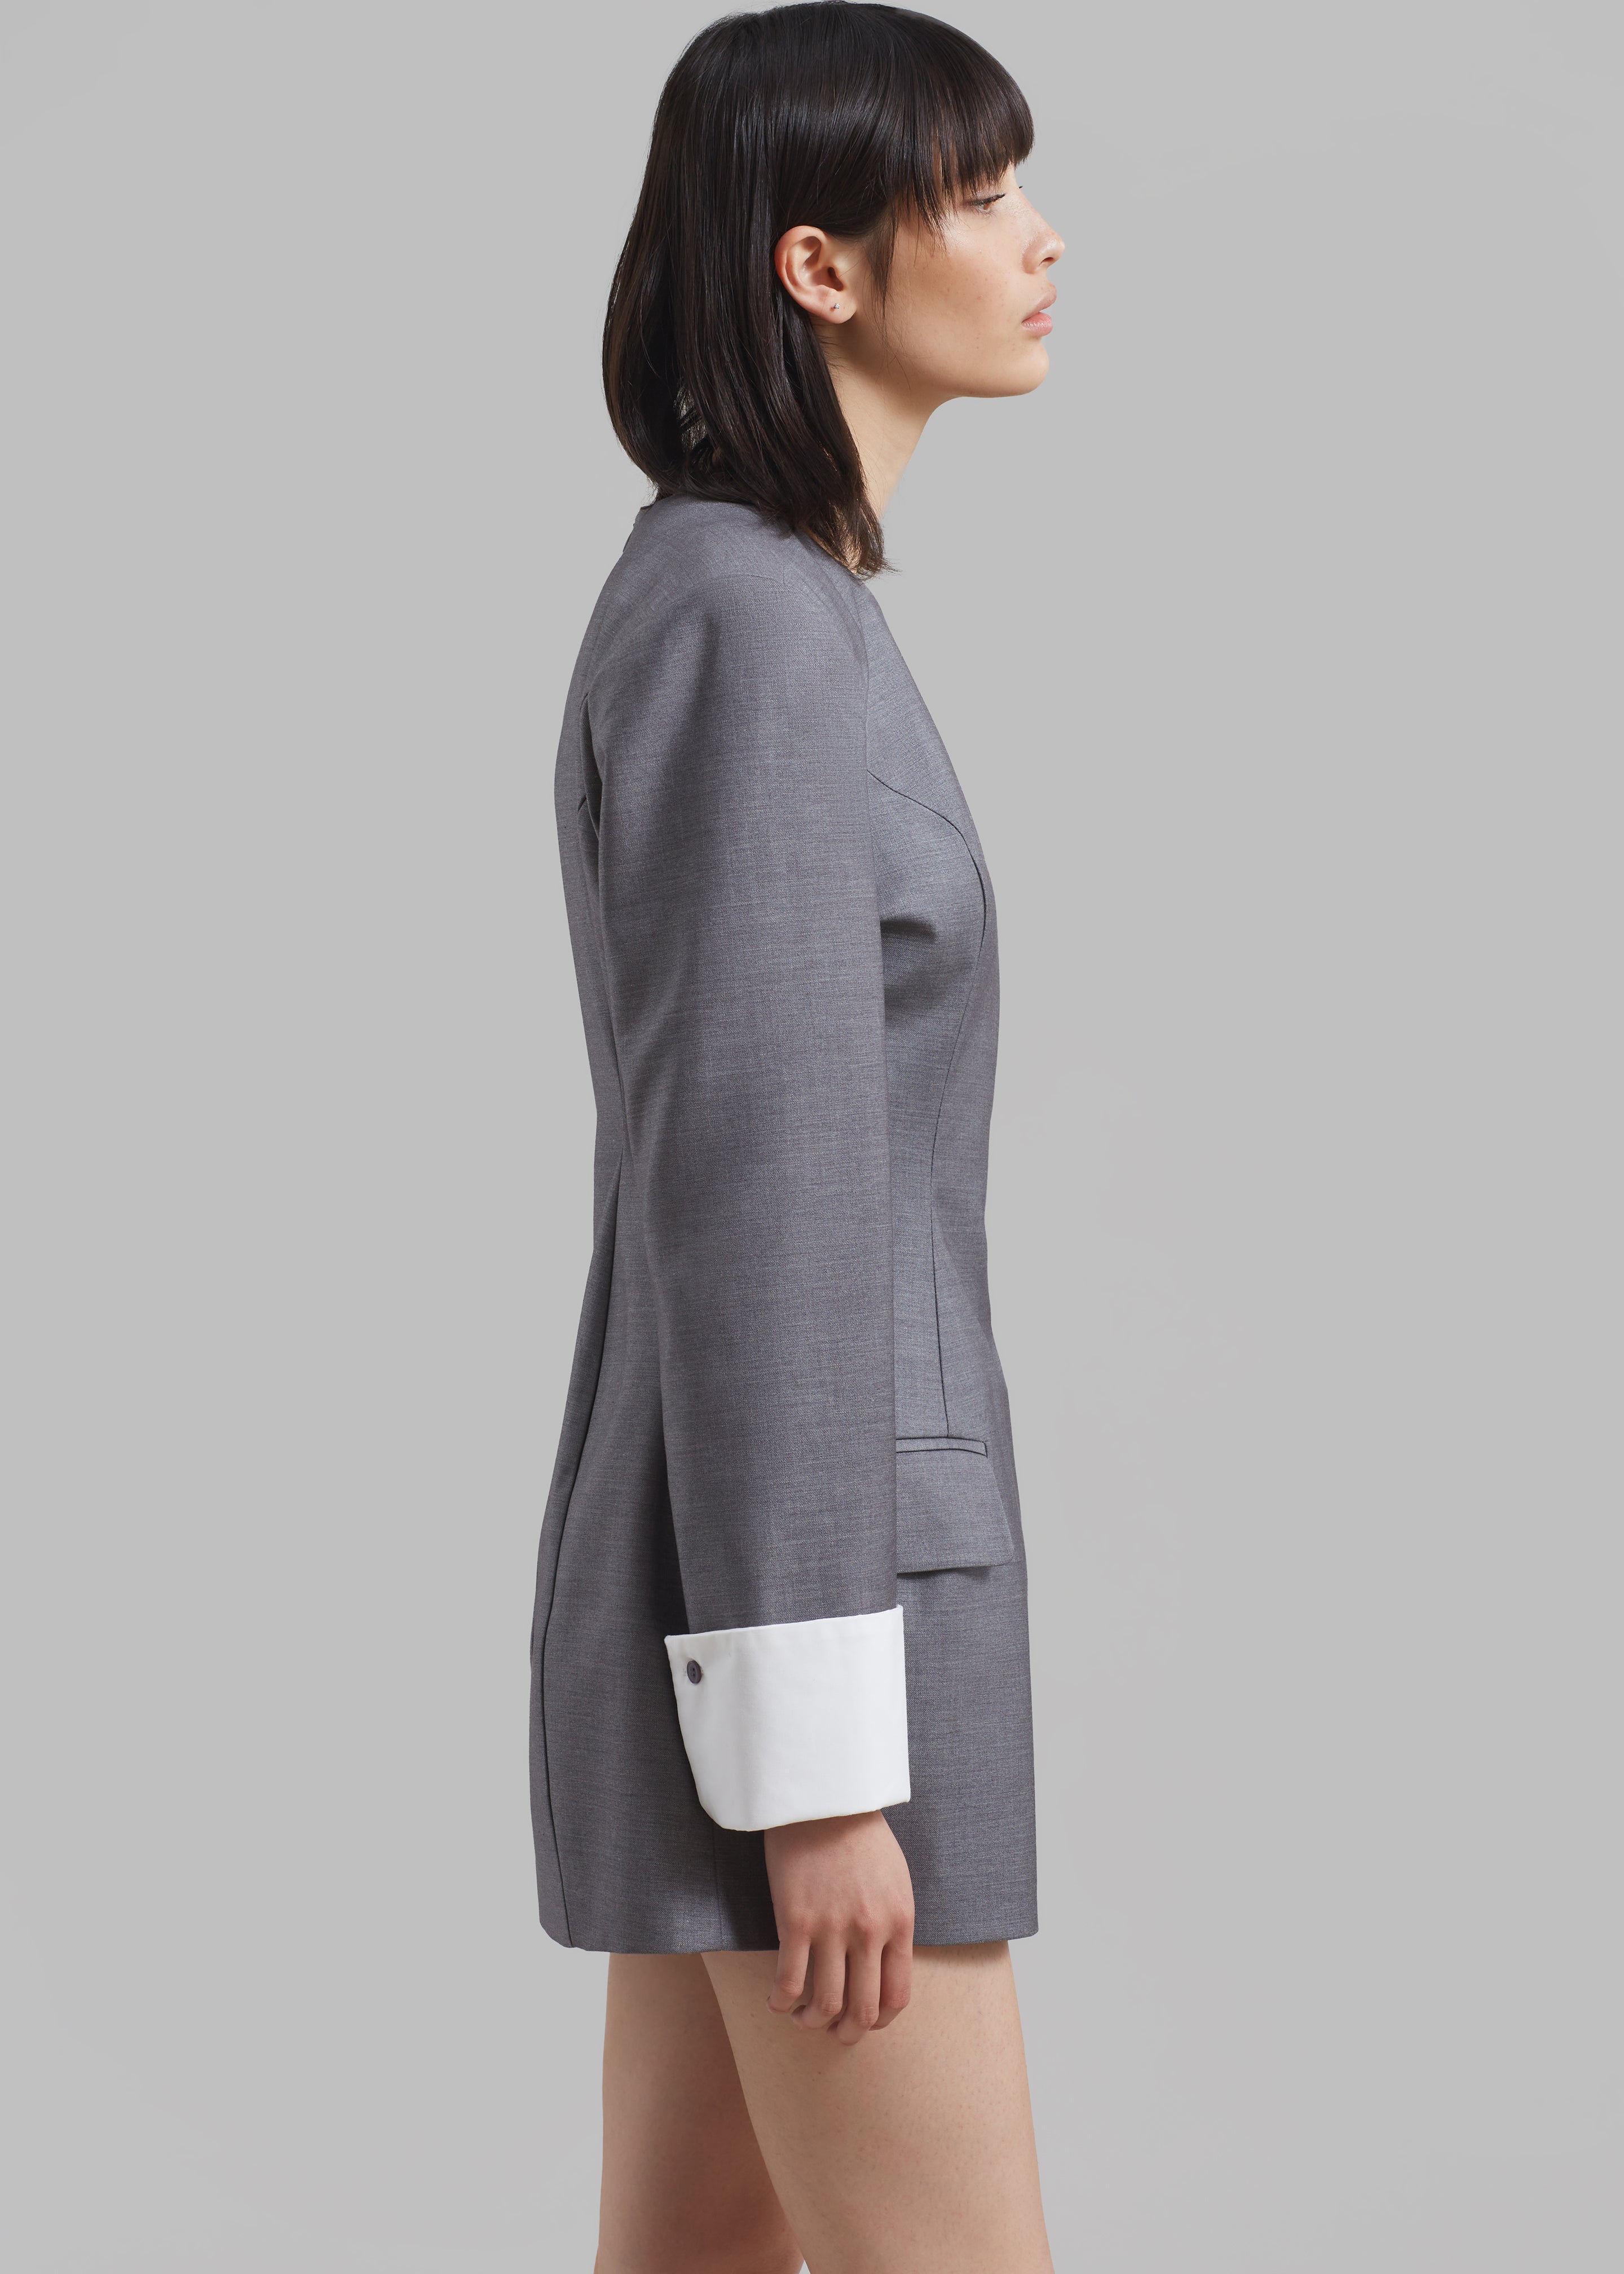 Eliza Padded Suit Dress - Grey - 3